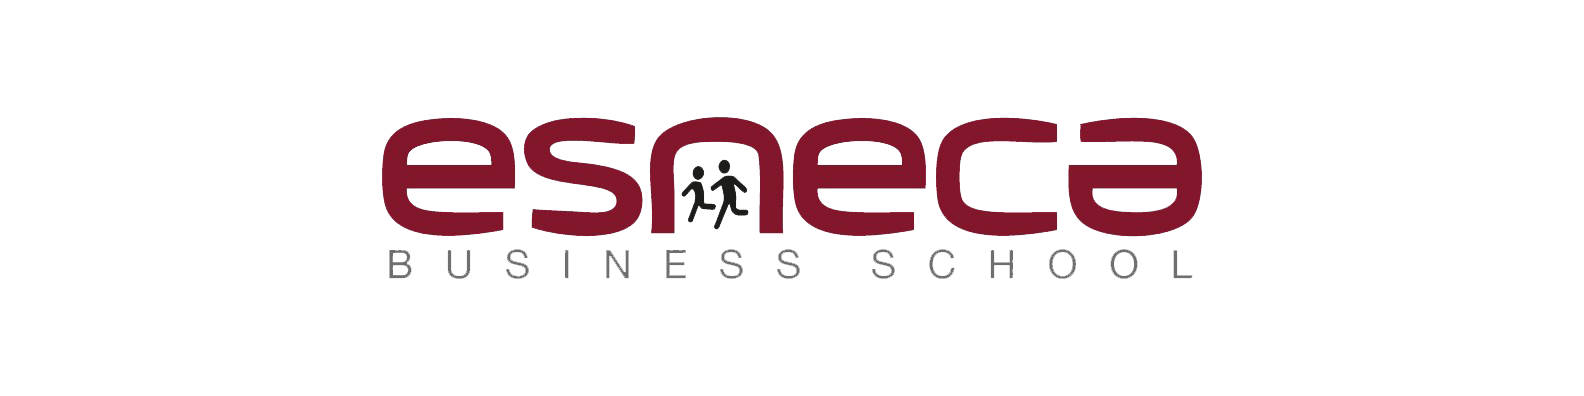 ESNECA (Business School)